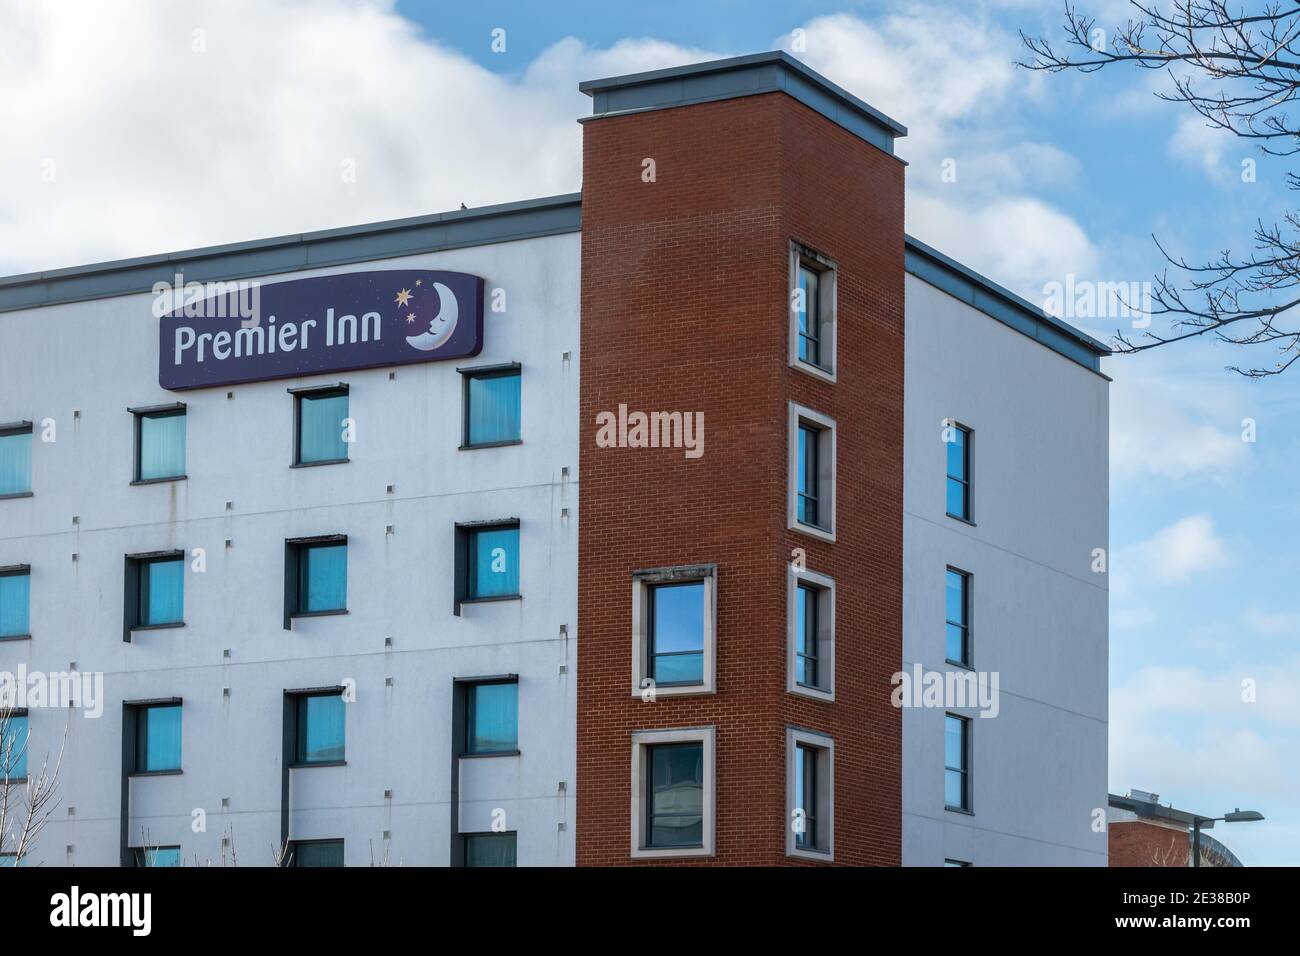 Premier Inn hotel accommodation, UK Stock Photo